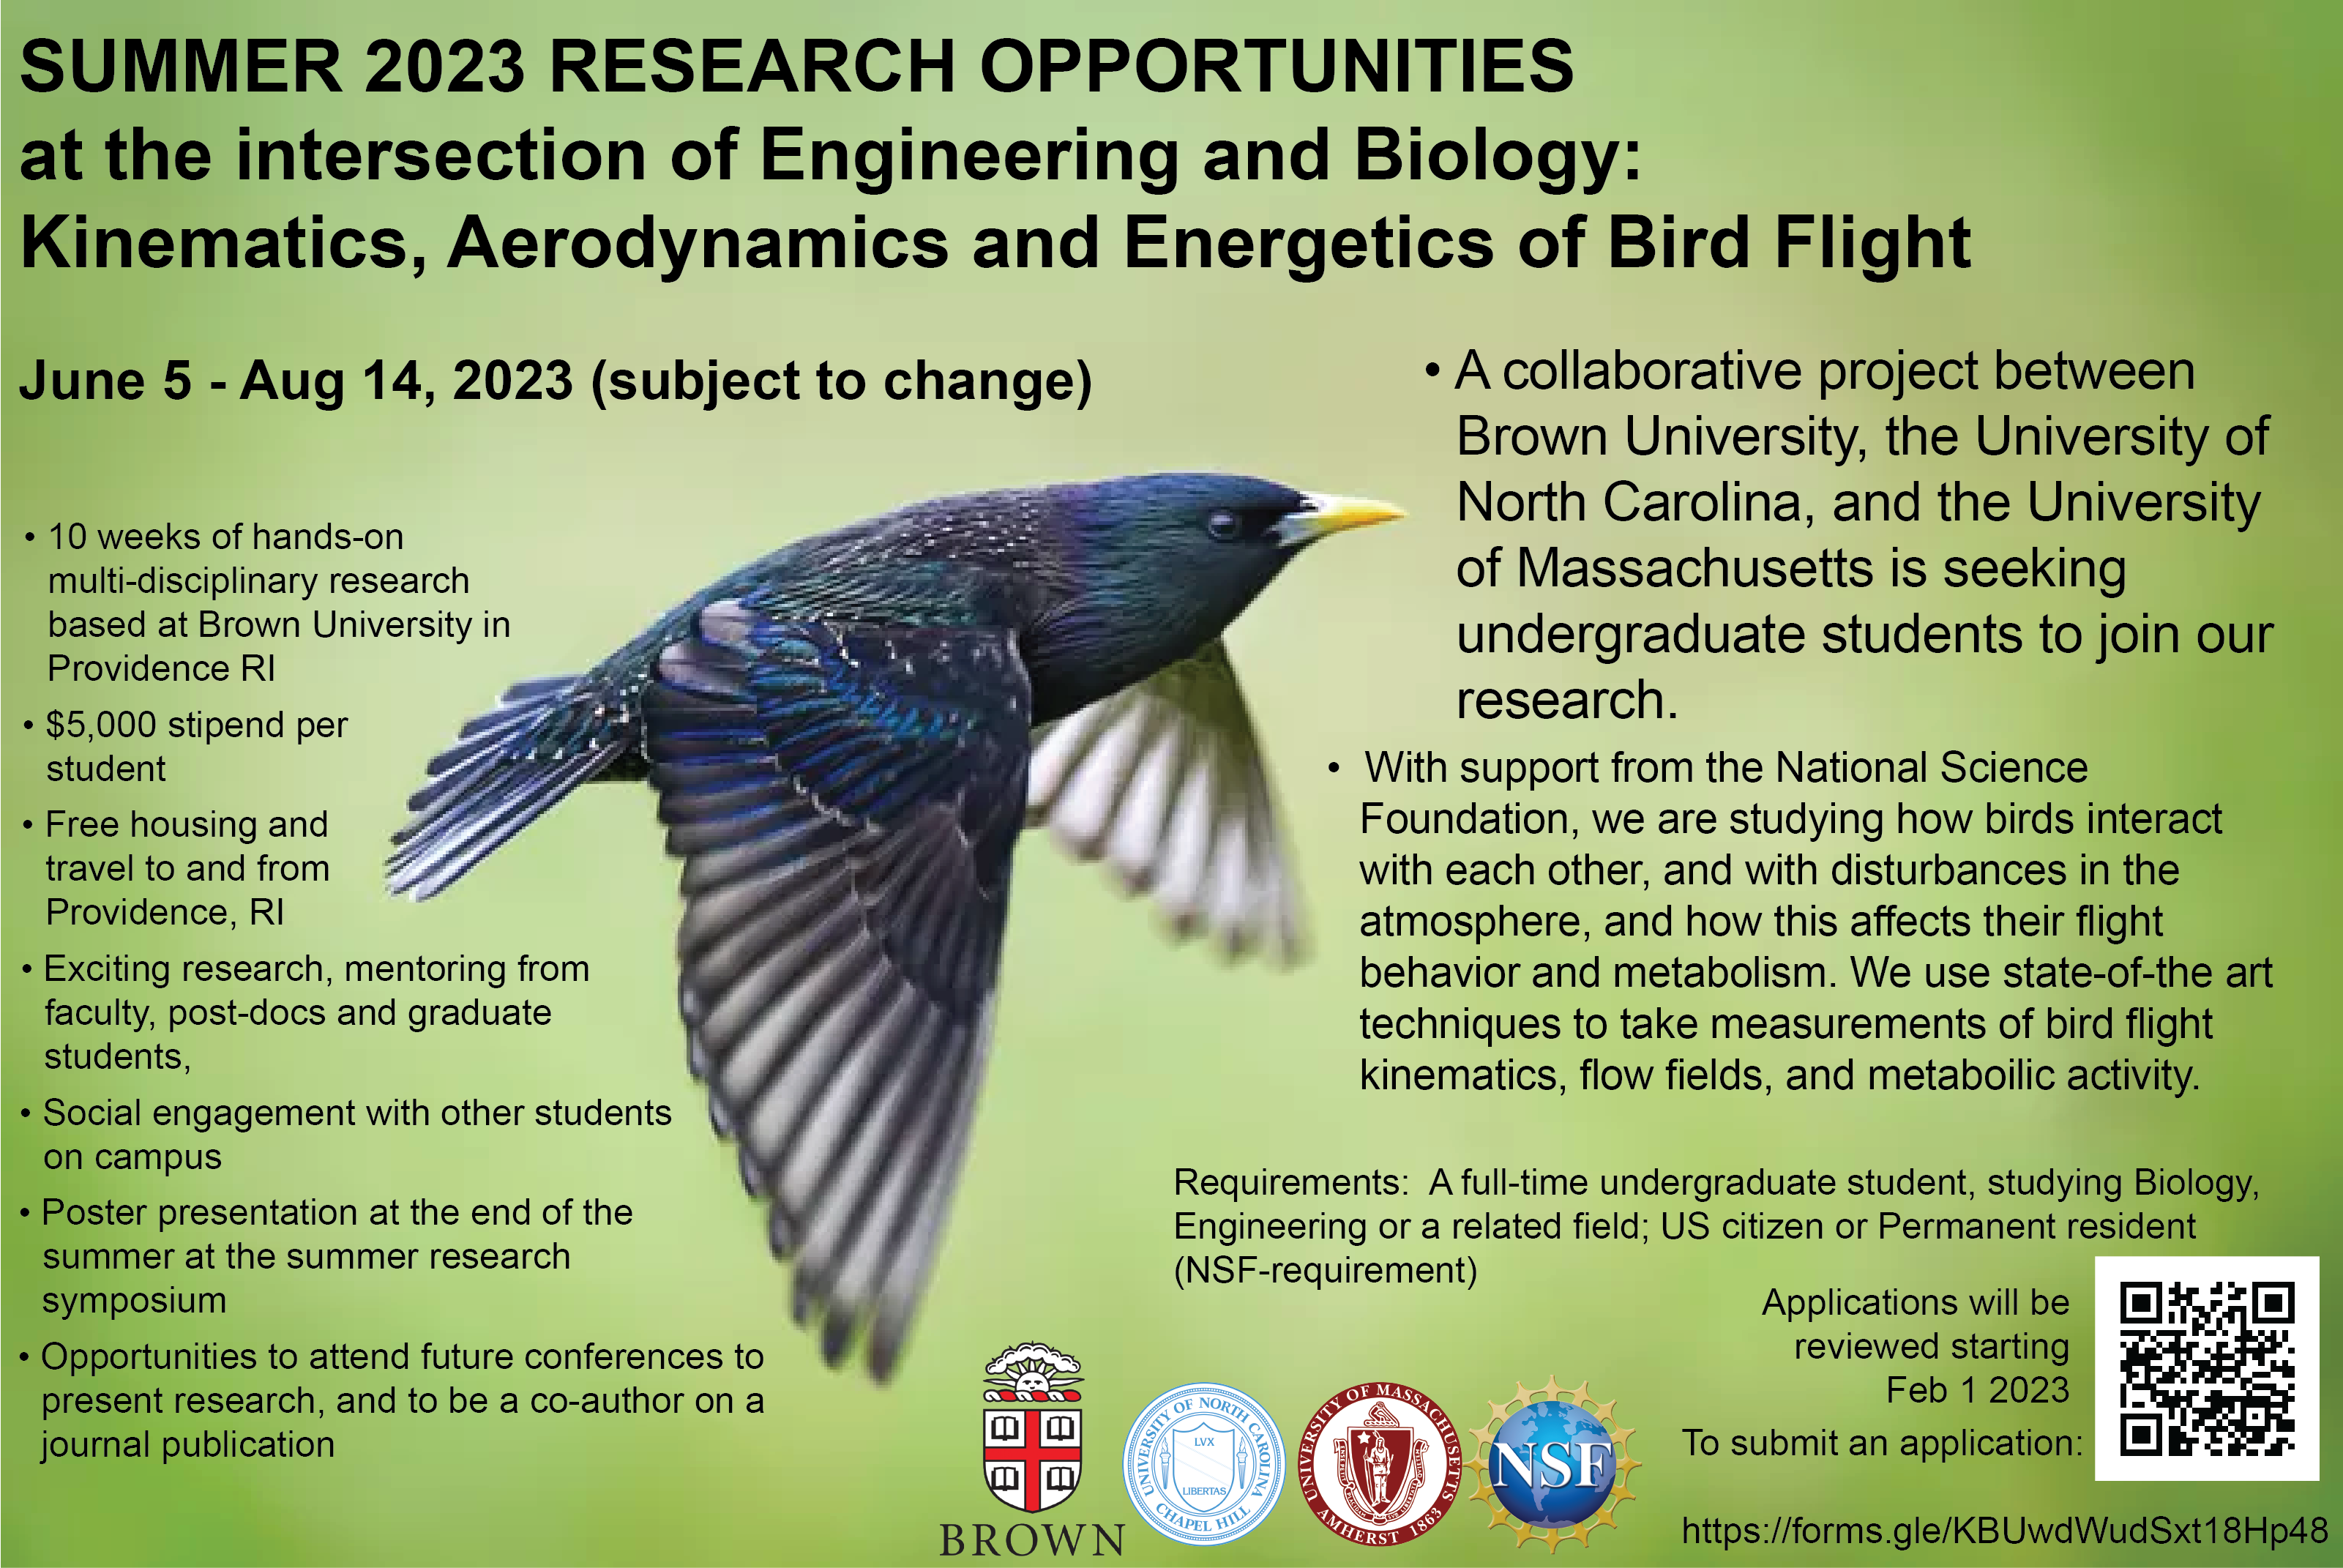 Summer research for undergraduates, Brown, UNC, UMass: Kinematics, Aerodynamics, and Energetics of Bird Flight.